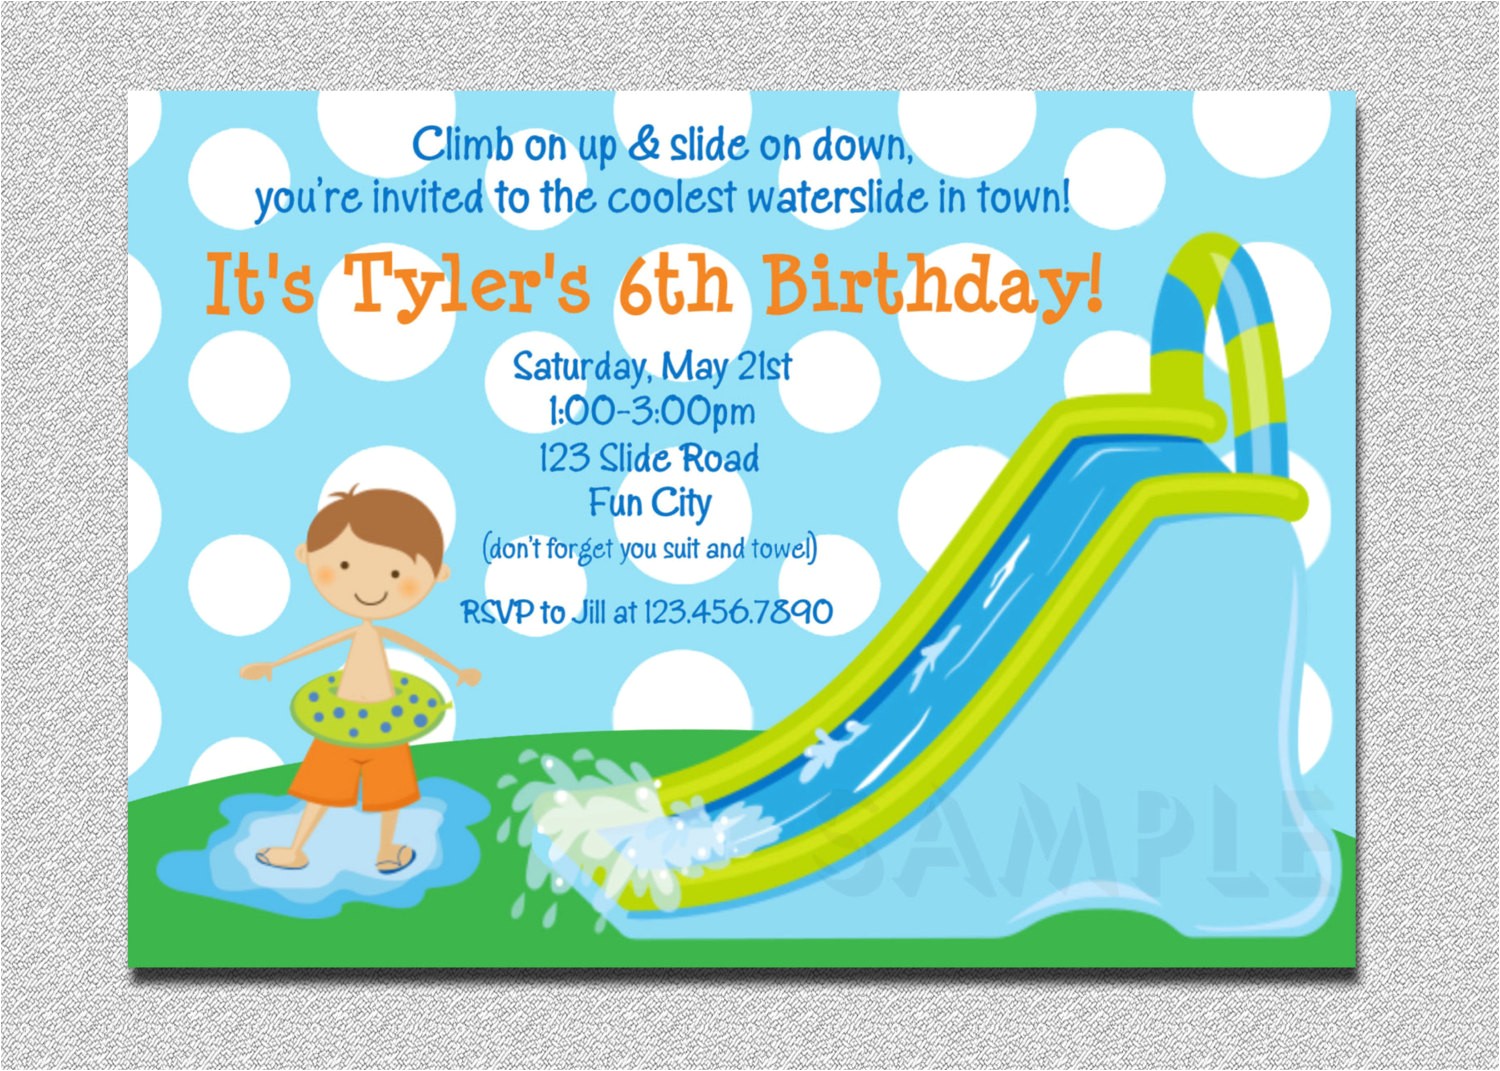 Water Slide Birthday Party Invitations Waterslide Birthday Invitations Water Slide Birthday Party